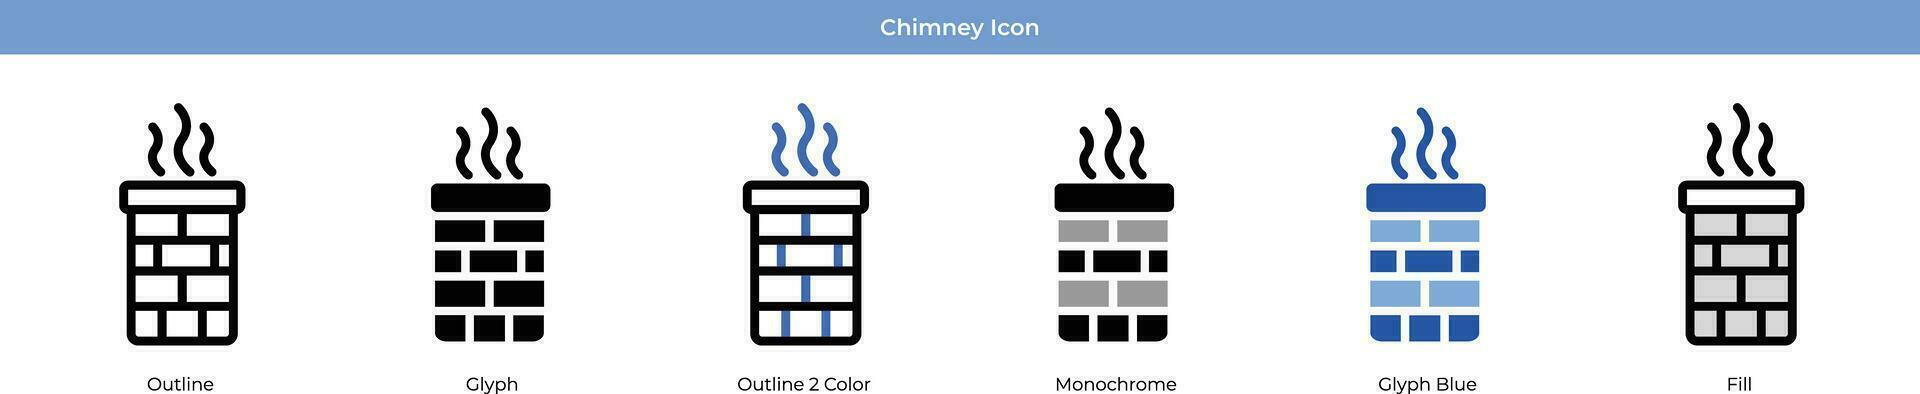 Chimey Icon Set vector